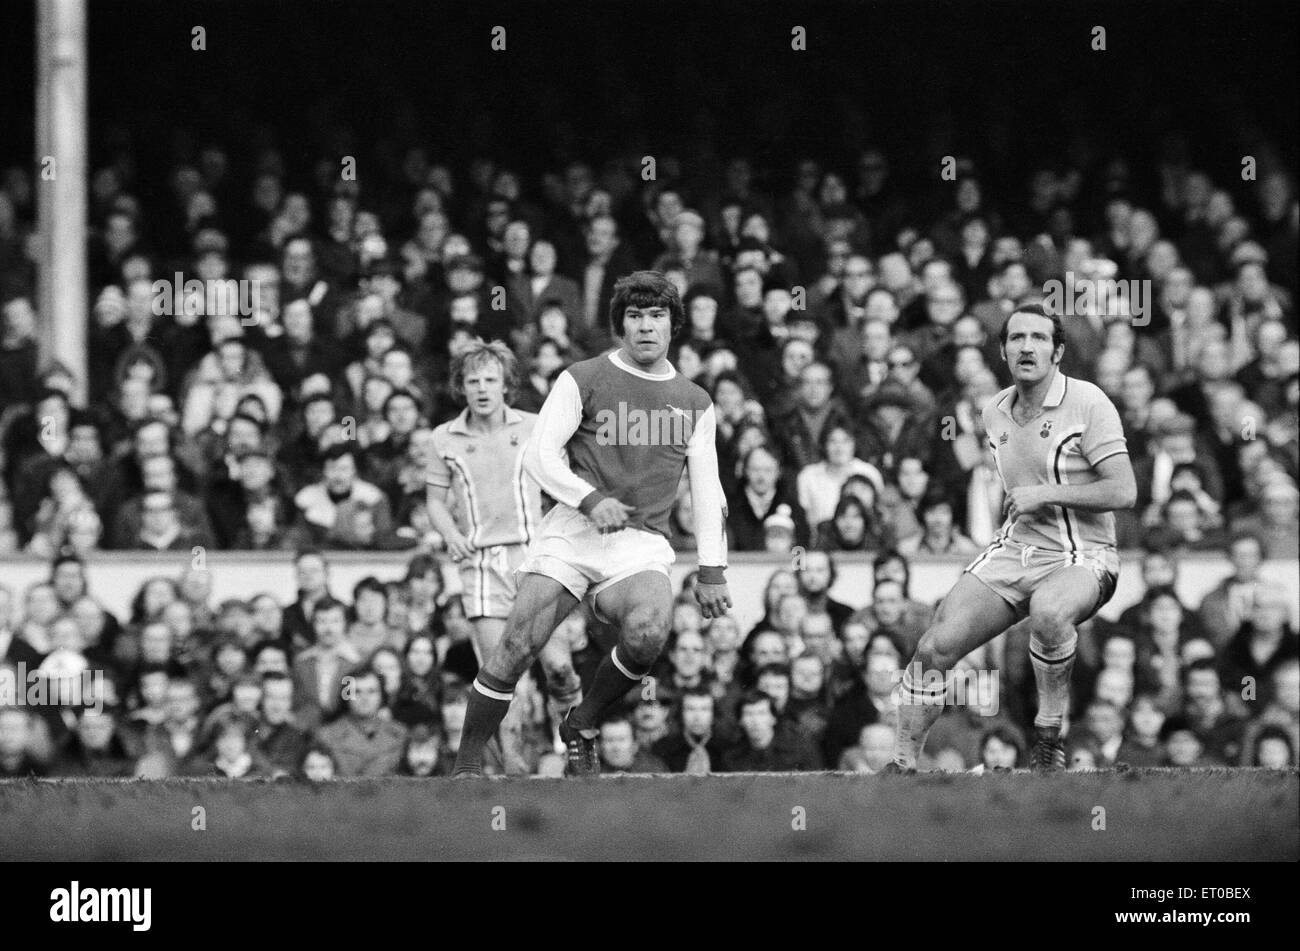 Arsenal 3-1 Coventry City, FA Cup Match à Highbury, samedi 29 janvier 1977. Banque D'Images